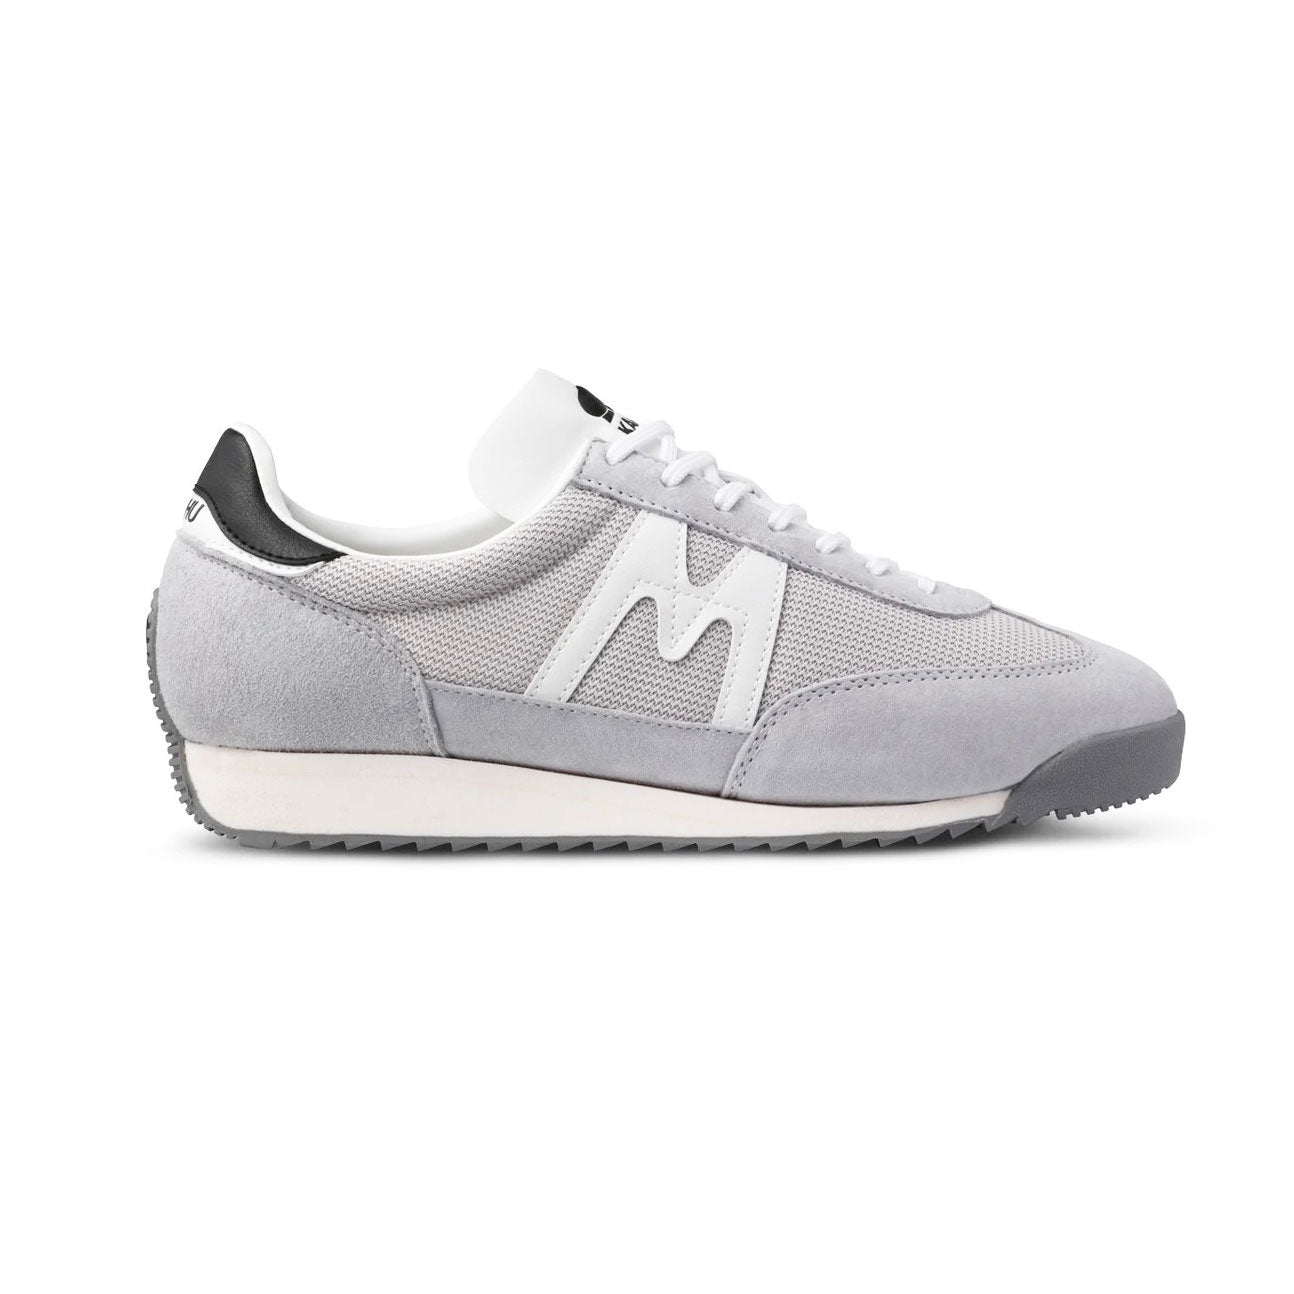 Karhu Mestari Dawn Blue Bright White New Men's 70s 80s Retro Style Sneakers Running Shoes Size 11 F805039